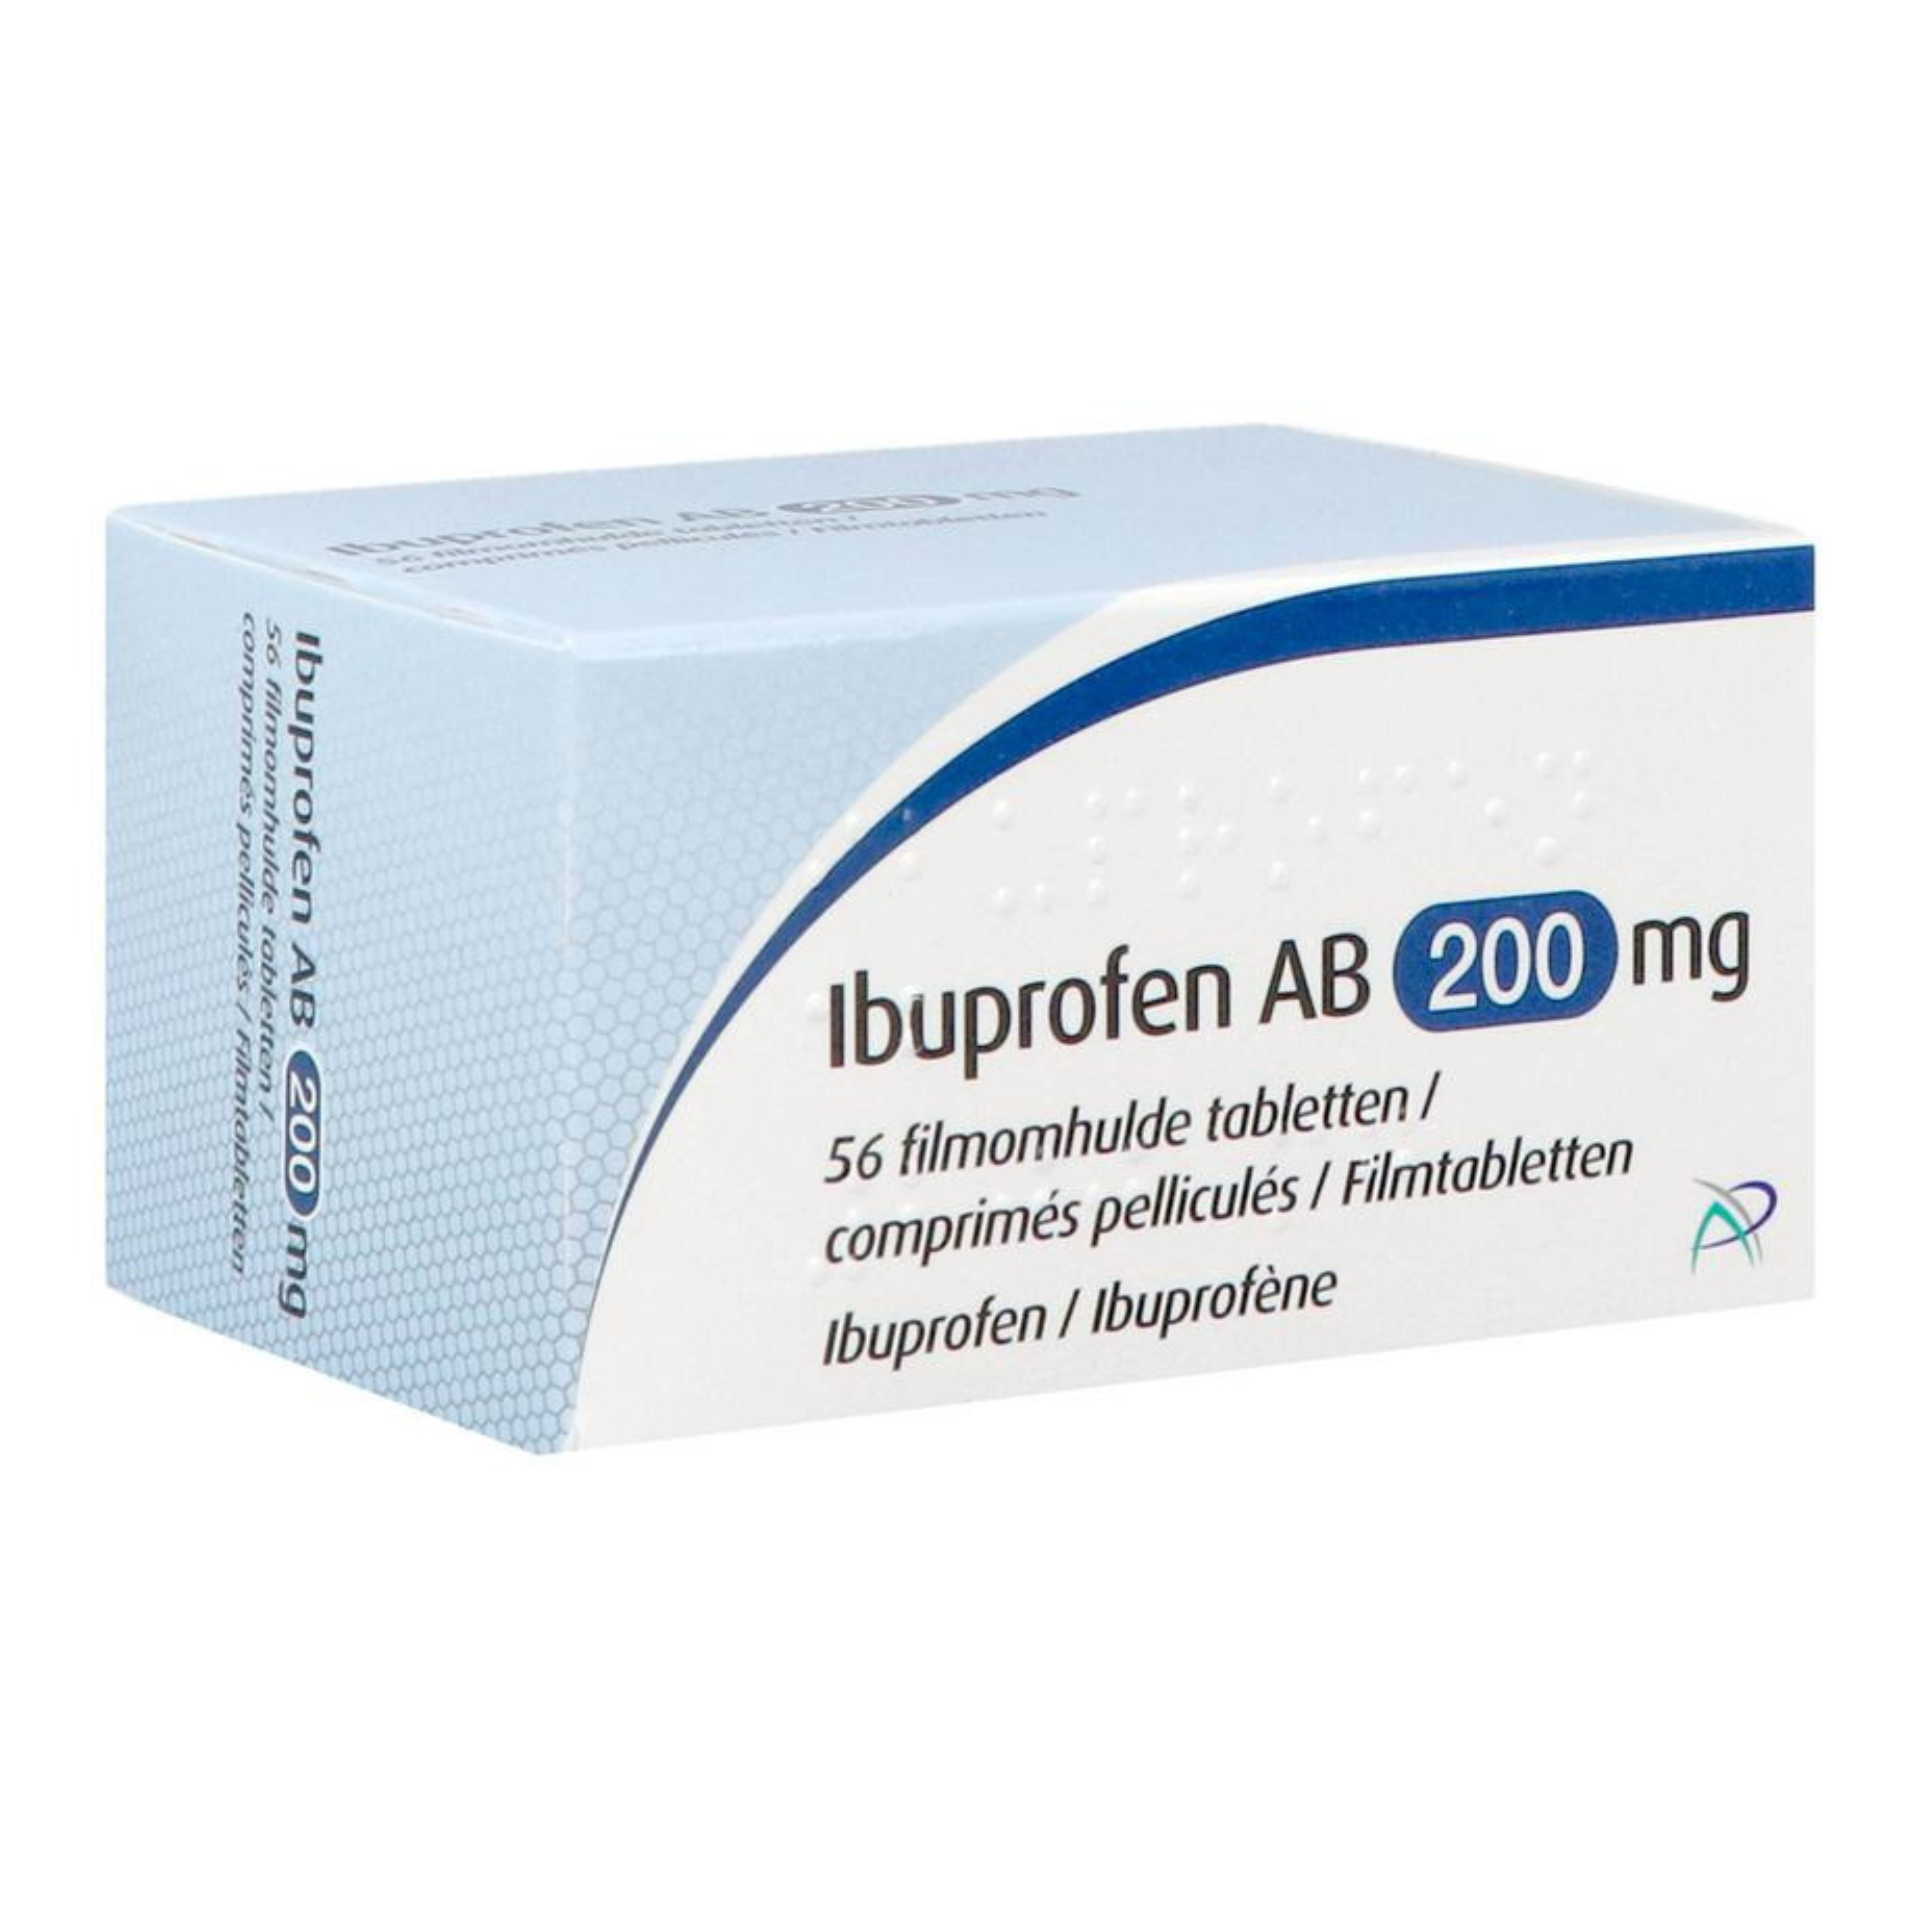 Ibuprofen AB 200 mg Filmomhulde tabletten